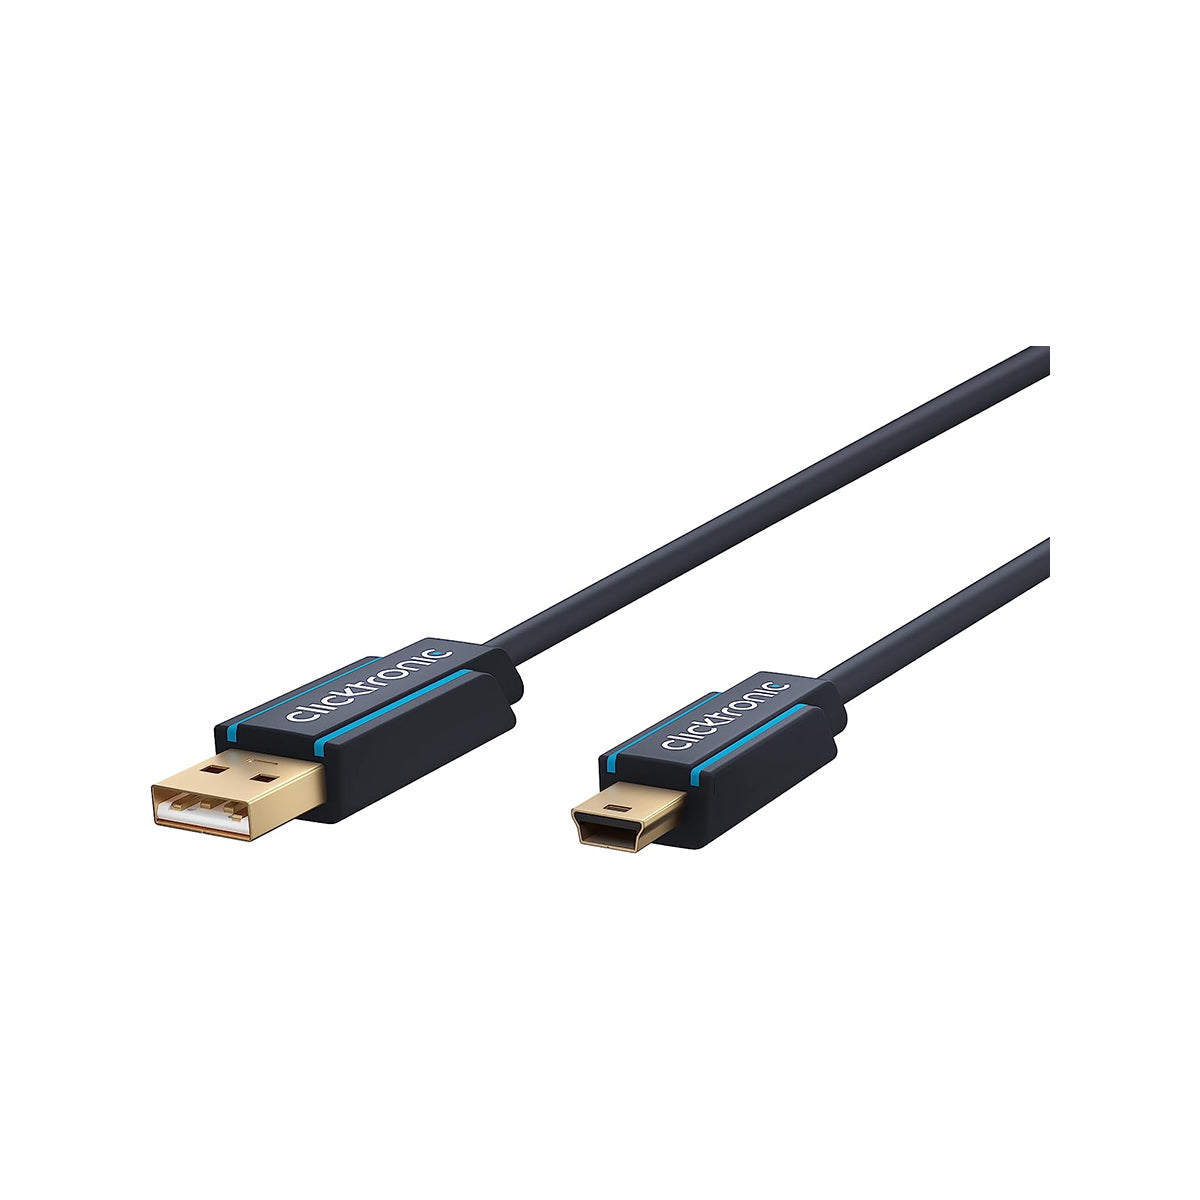 Clicktronic USB A 2.0 to USB MINI-B 5 Cable - 1m